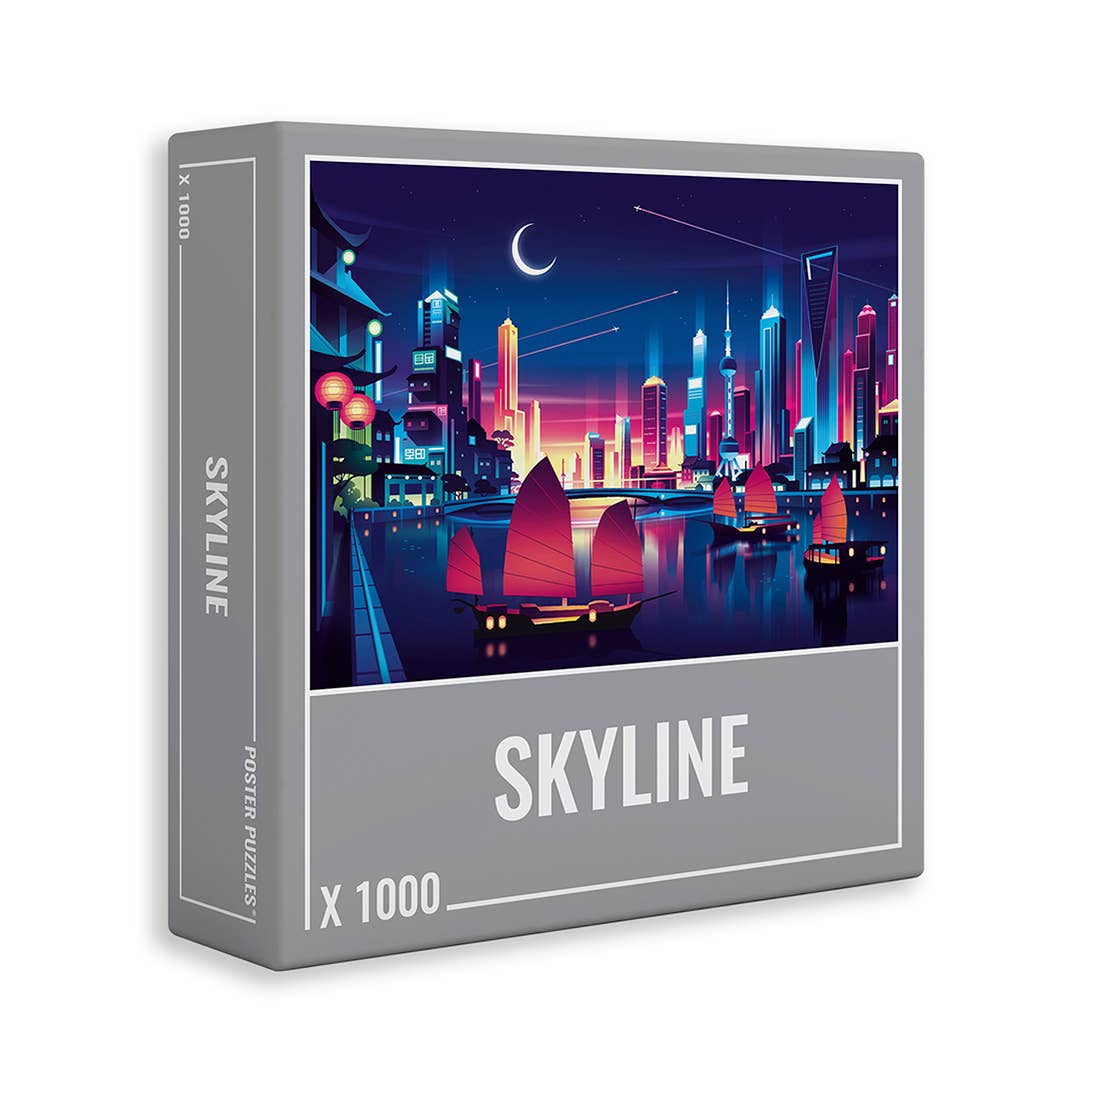 Skyline 1000 Piece Jigsaw Puzzle by Cloudberries - Neon Cityscape